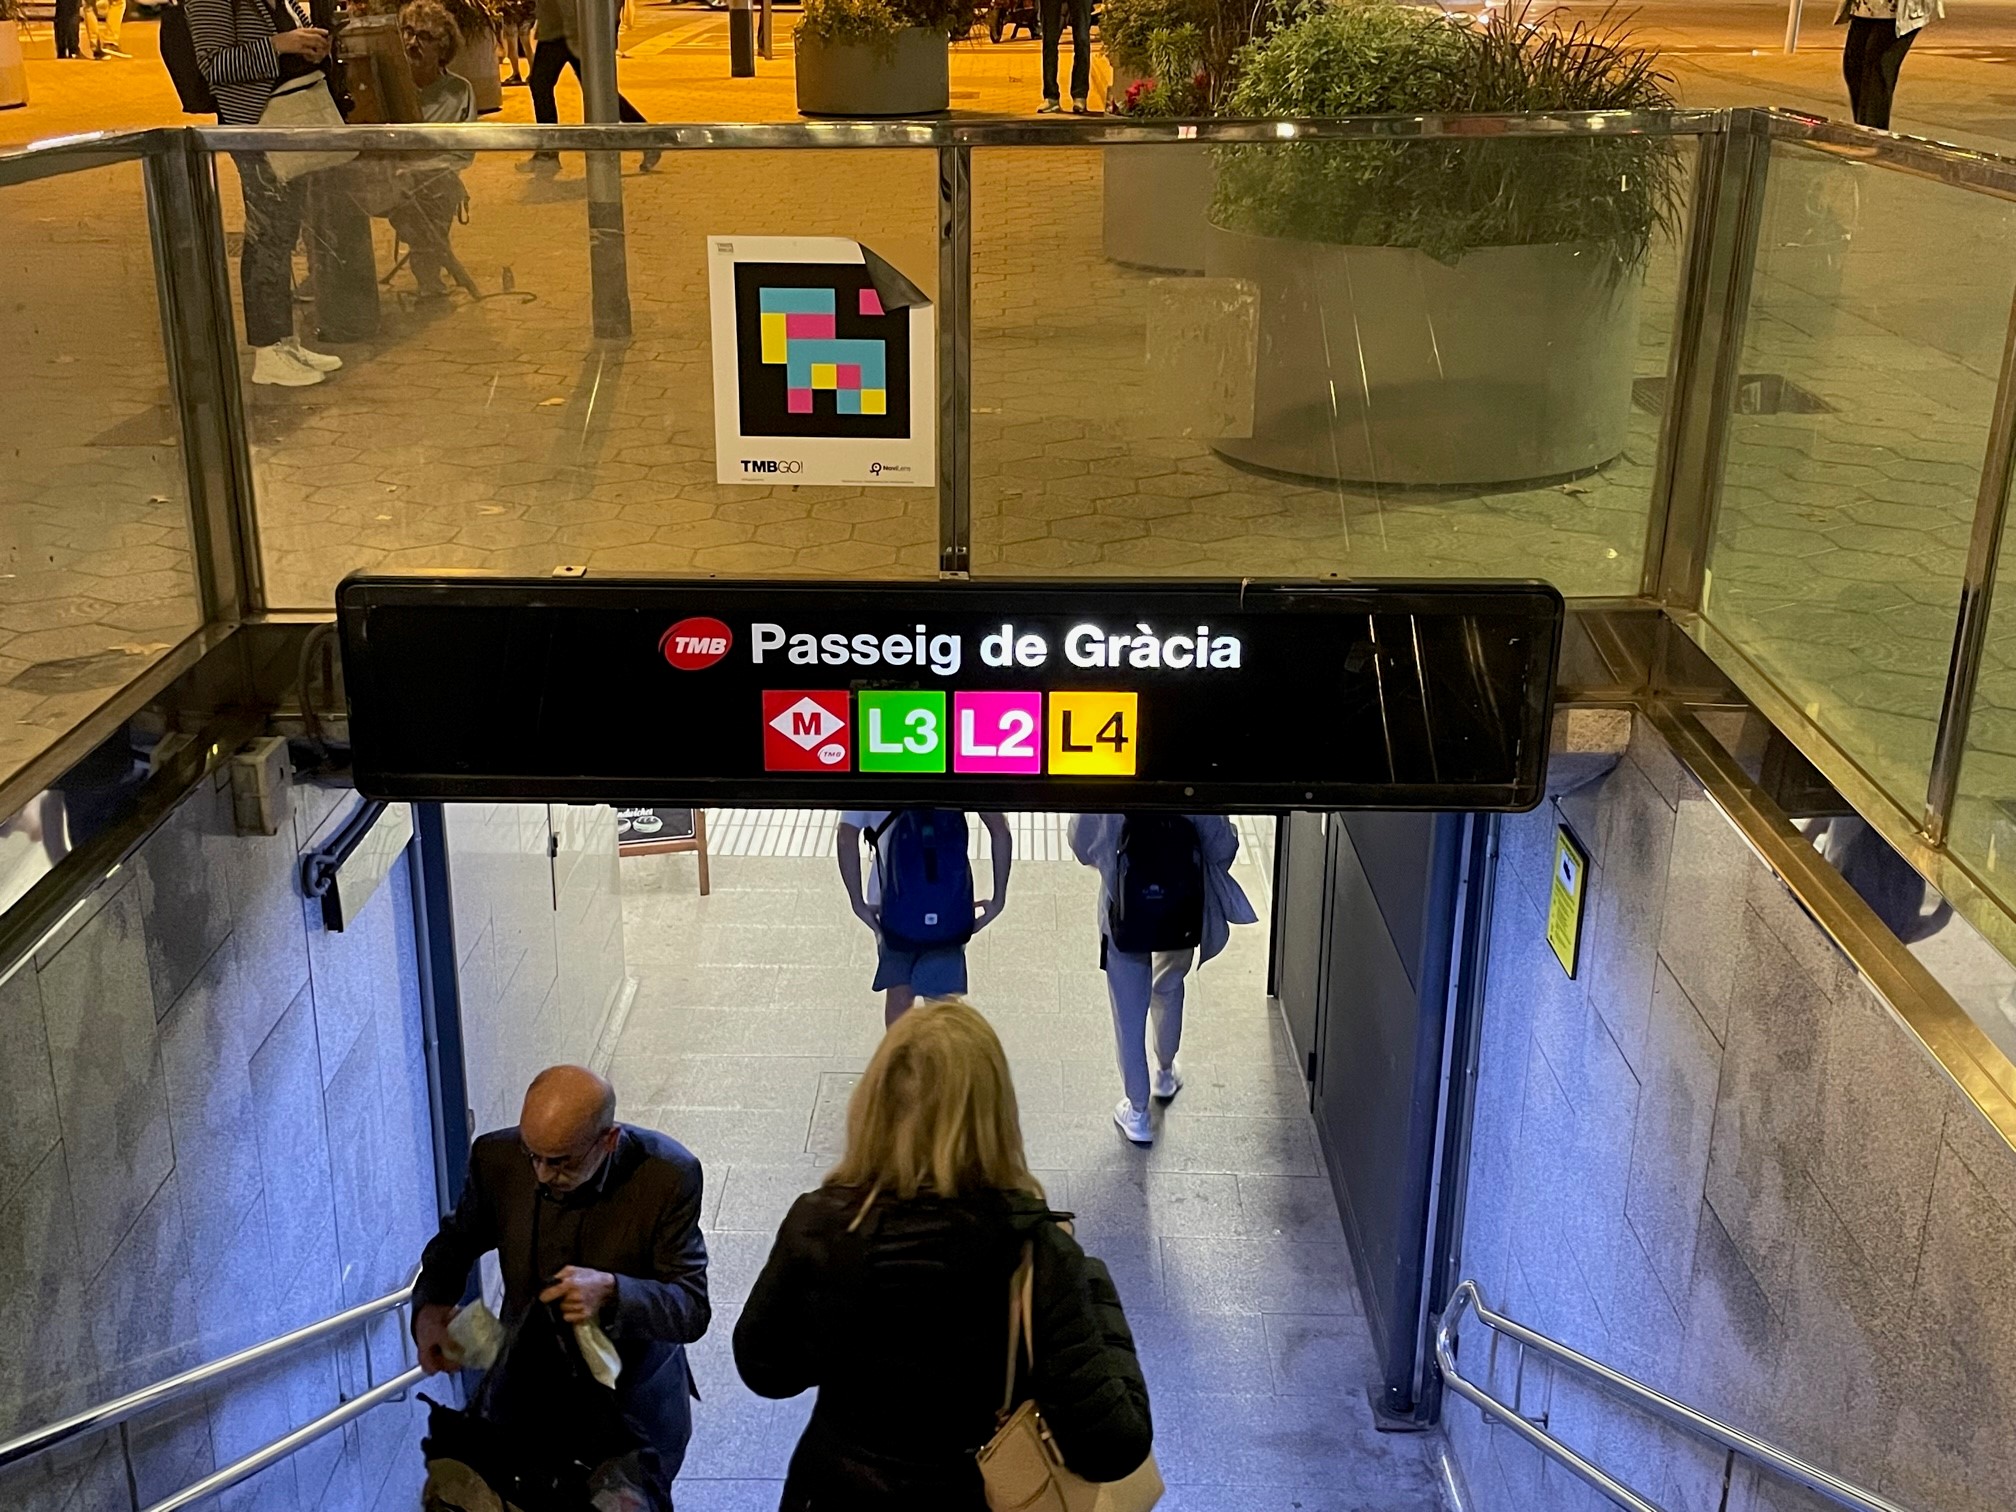 Barcelona digital twin public transit metro active travel computing (© ITS International)